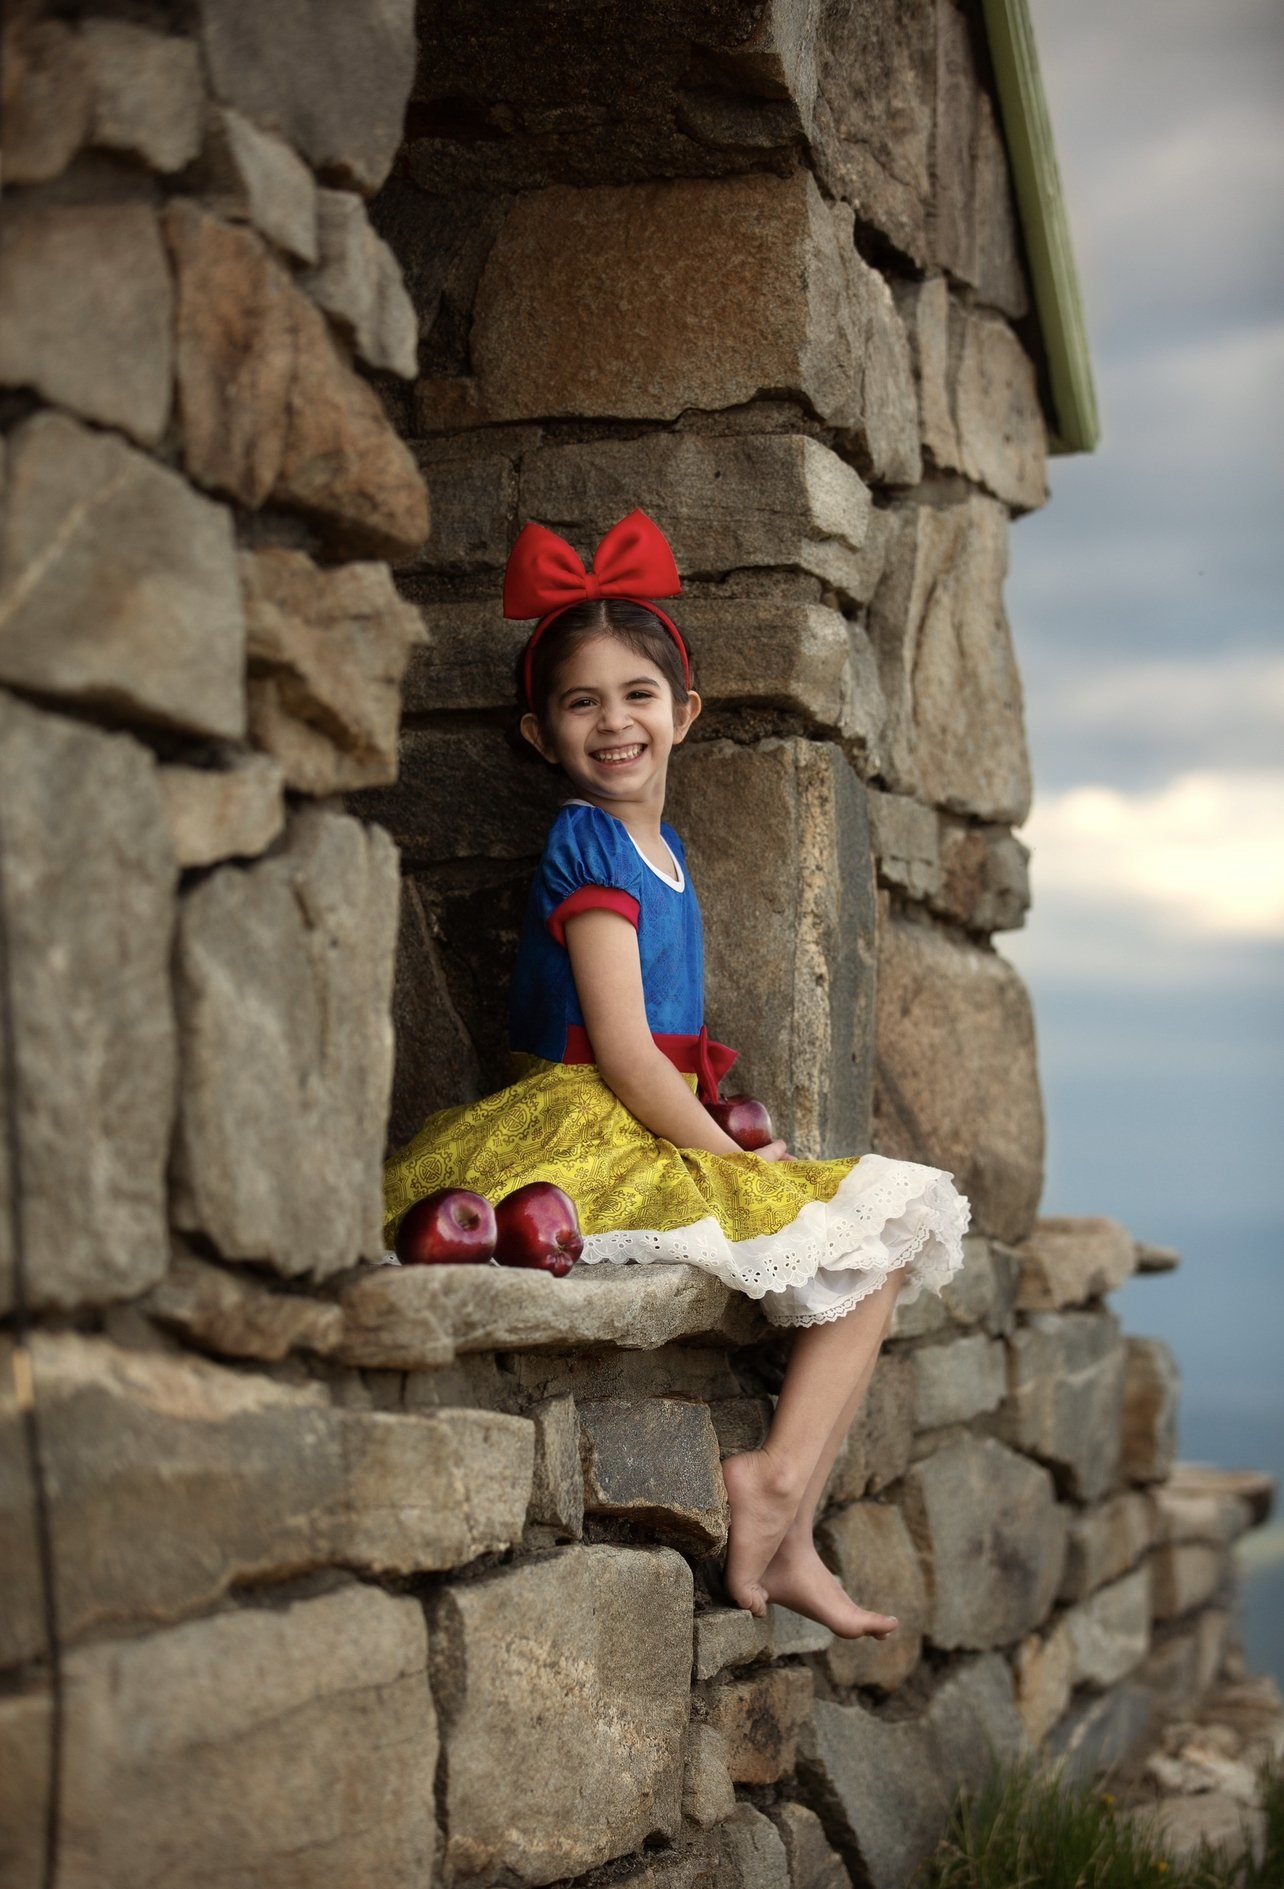 #Snow White Twirl Dress Costume Just For Littles 